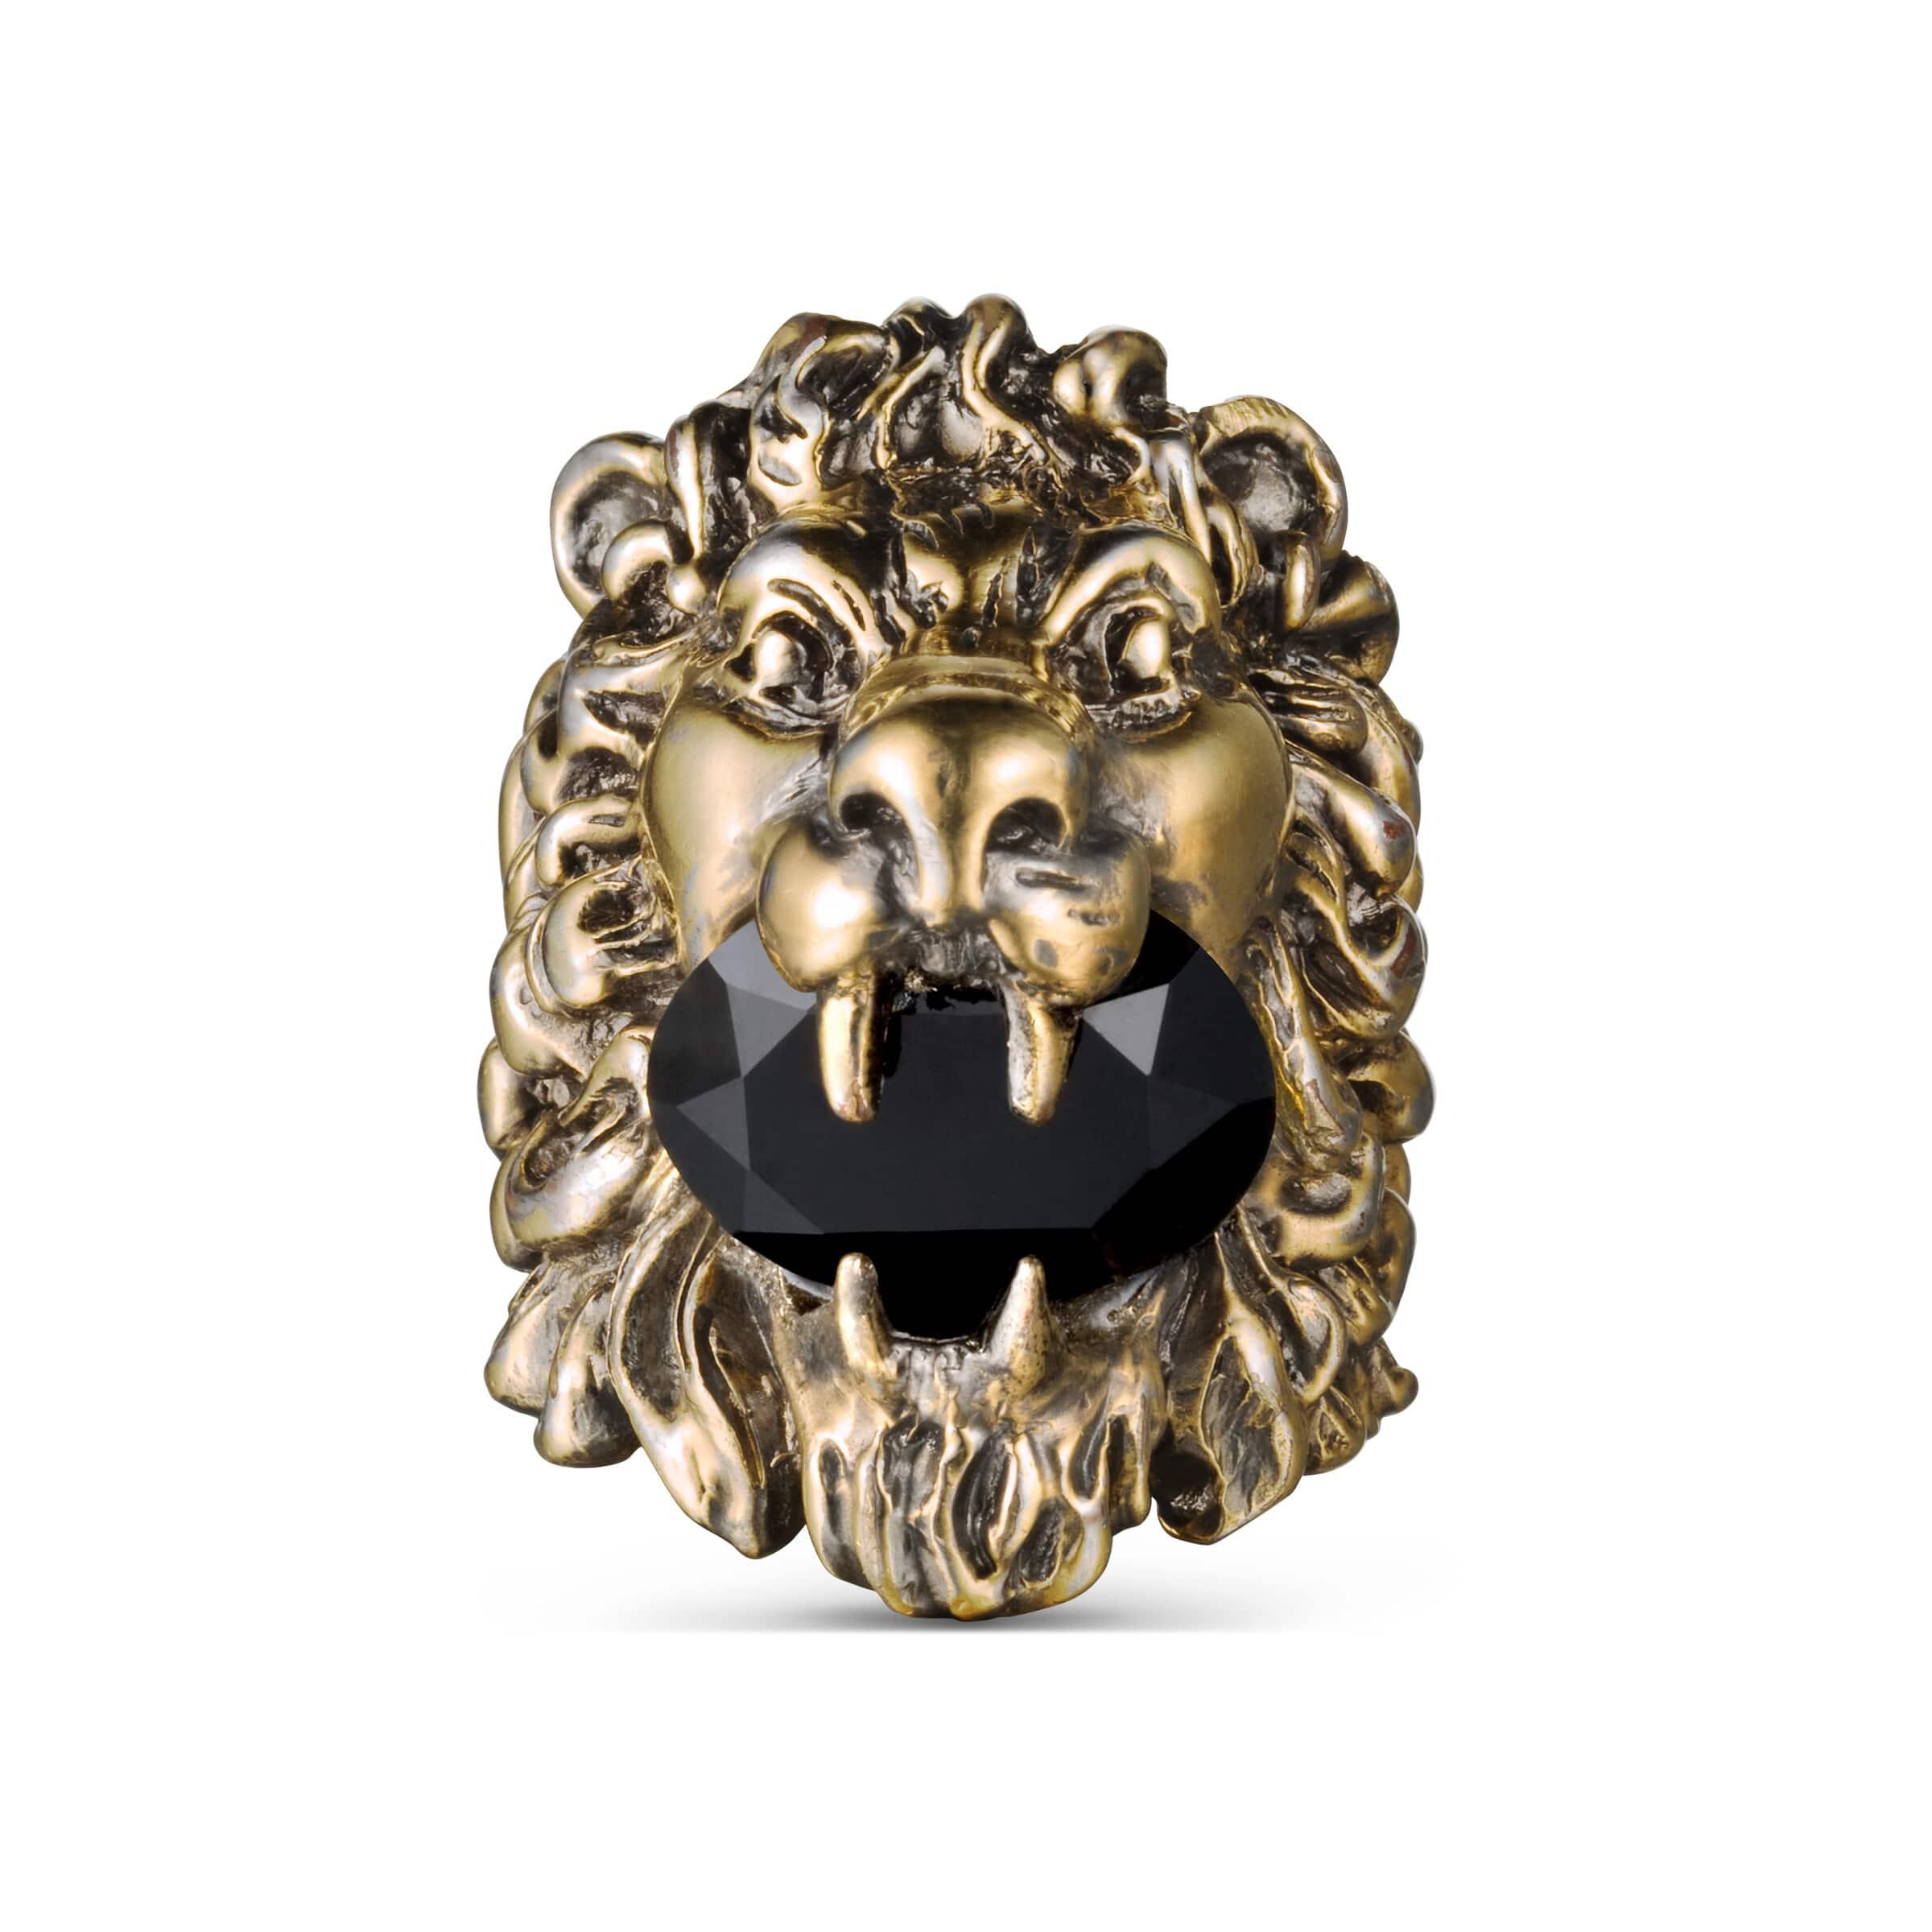 Lion head ring